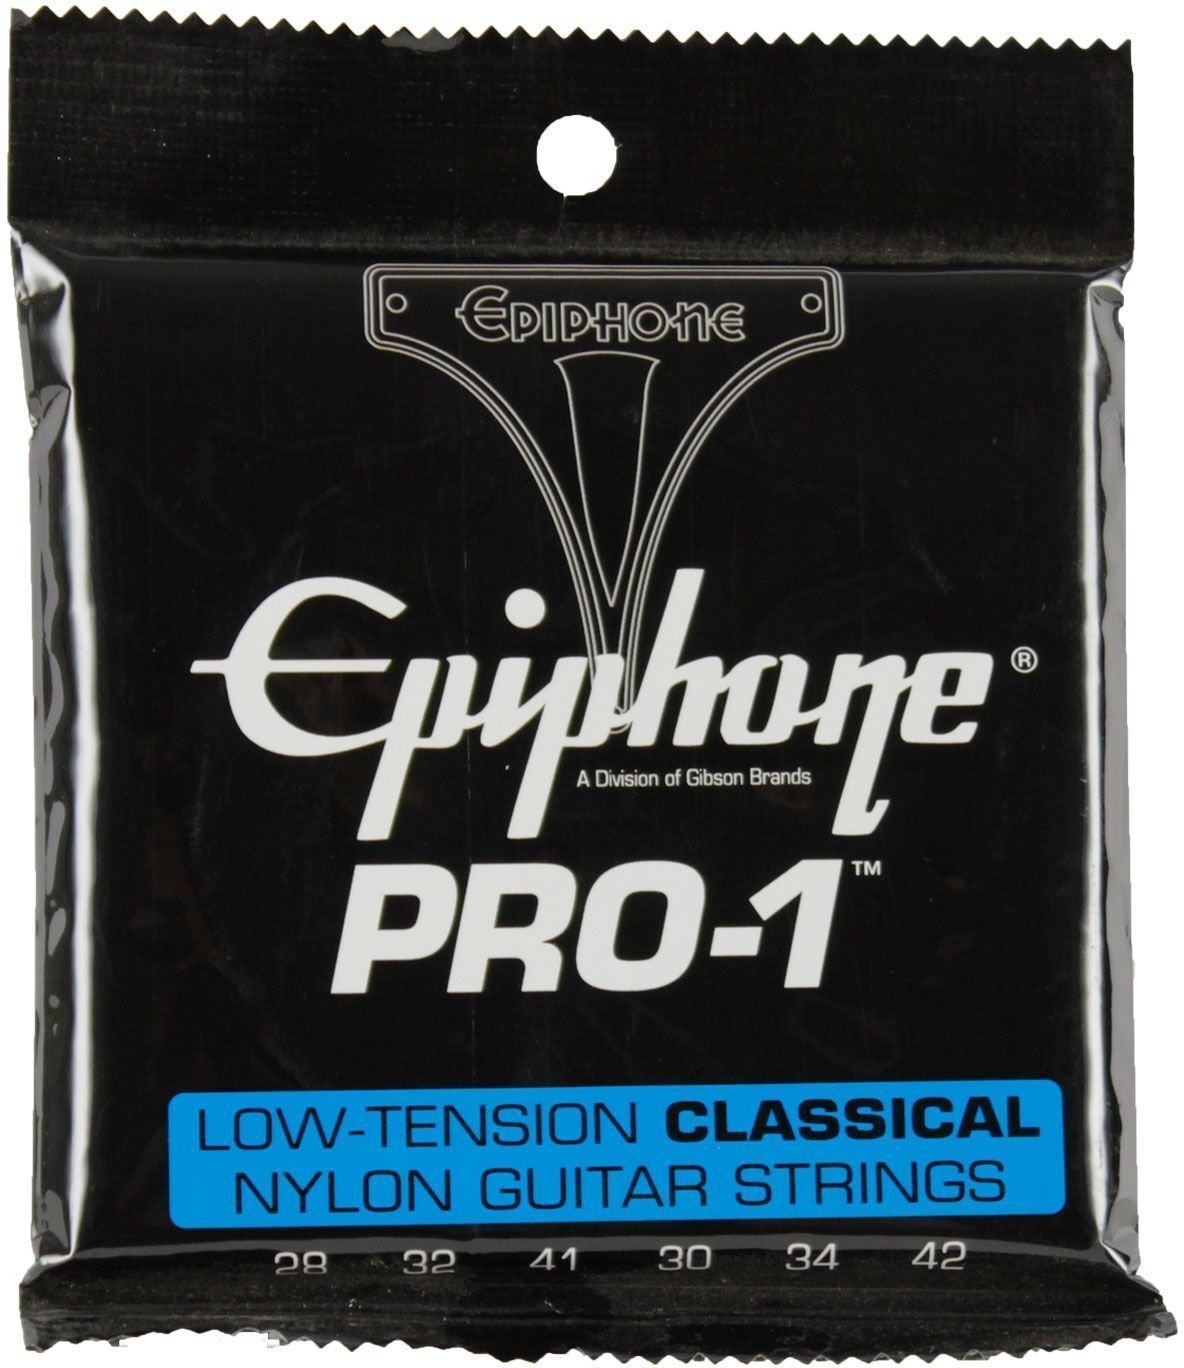 Corde Nylon Epiphone Pro-1 Ultra-Light Classical Strings